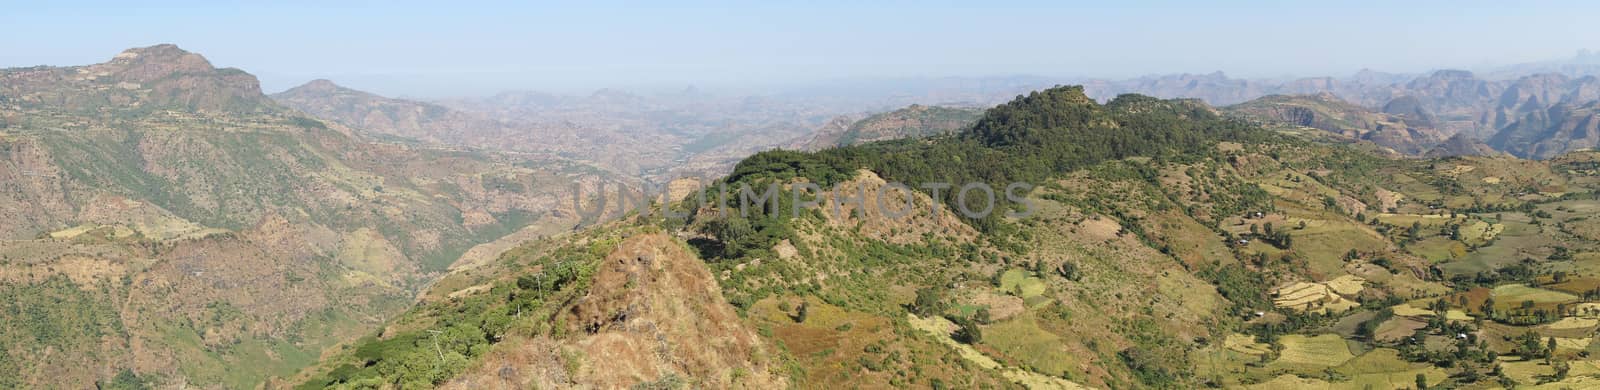 Wolkefit Pass, Ethiopia, Africa by alfotokunst